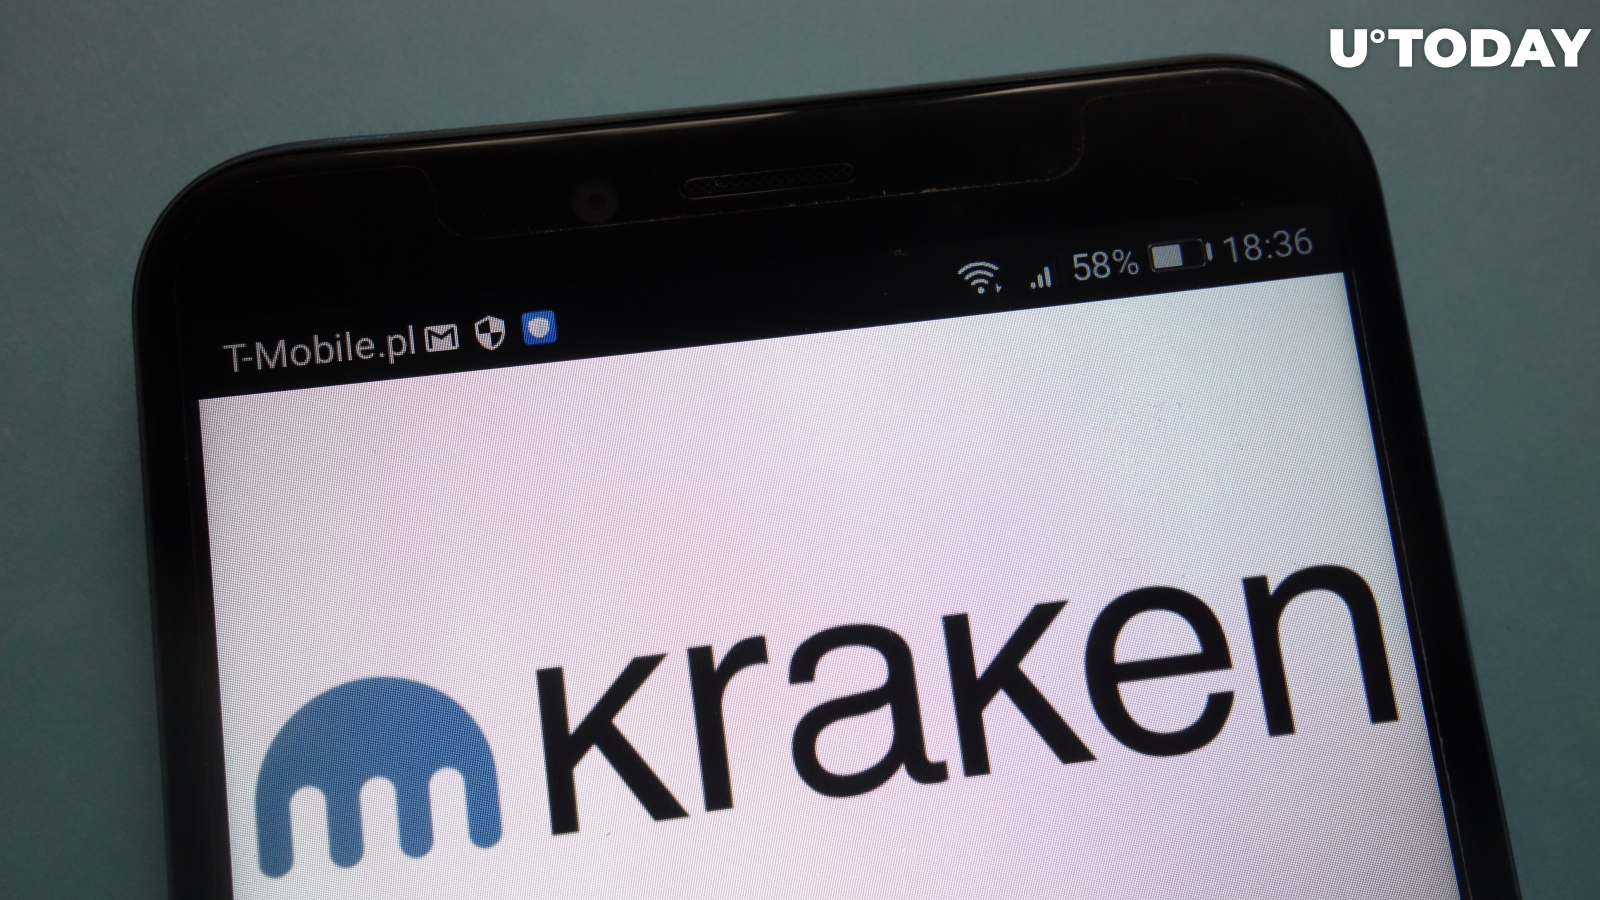 Kraken Confirms Its Plan to Go Public in 2022